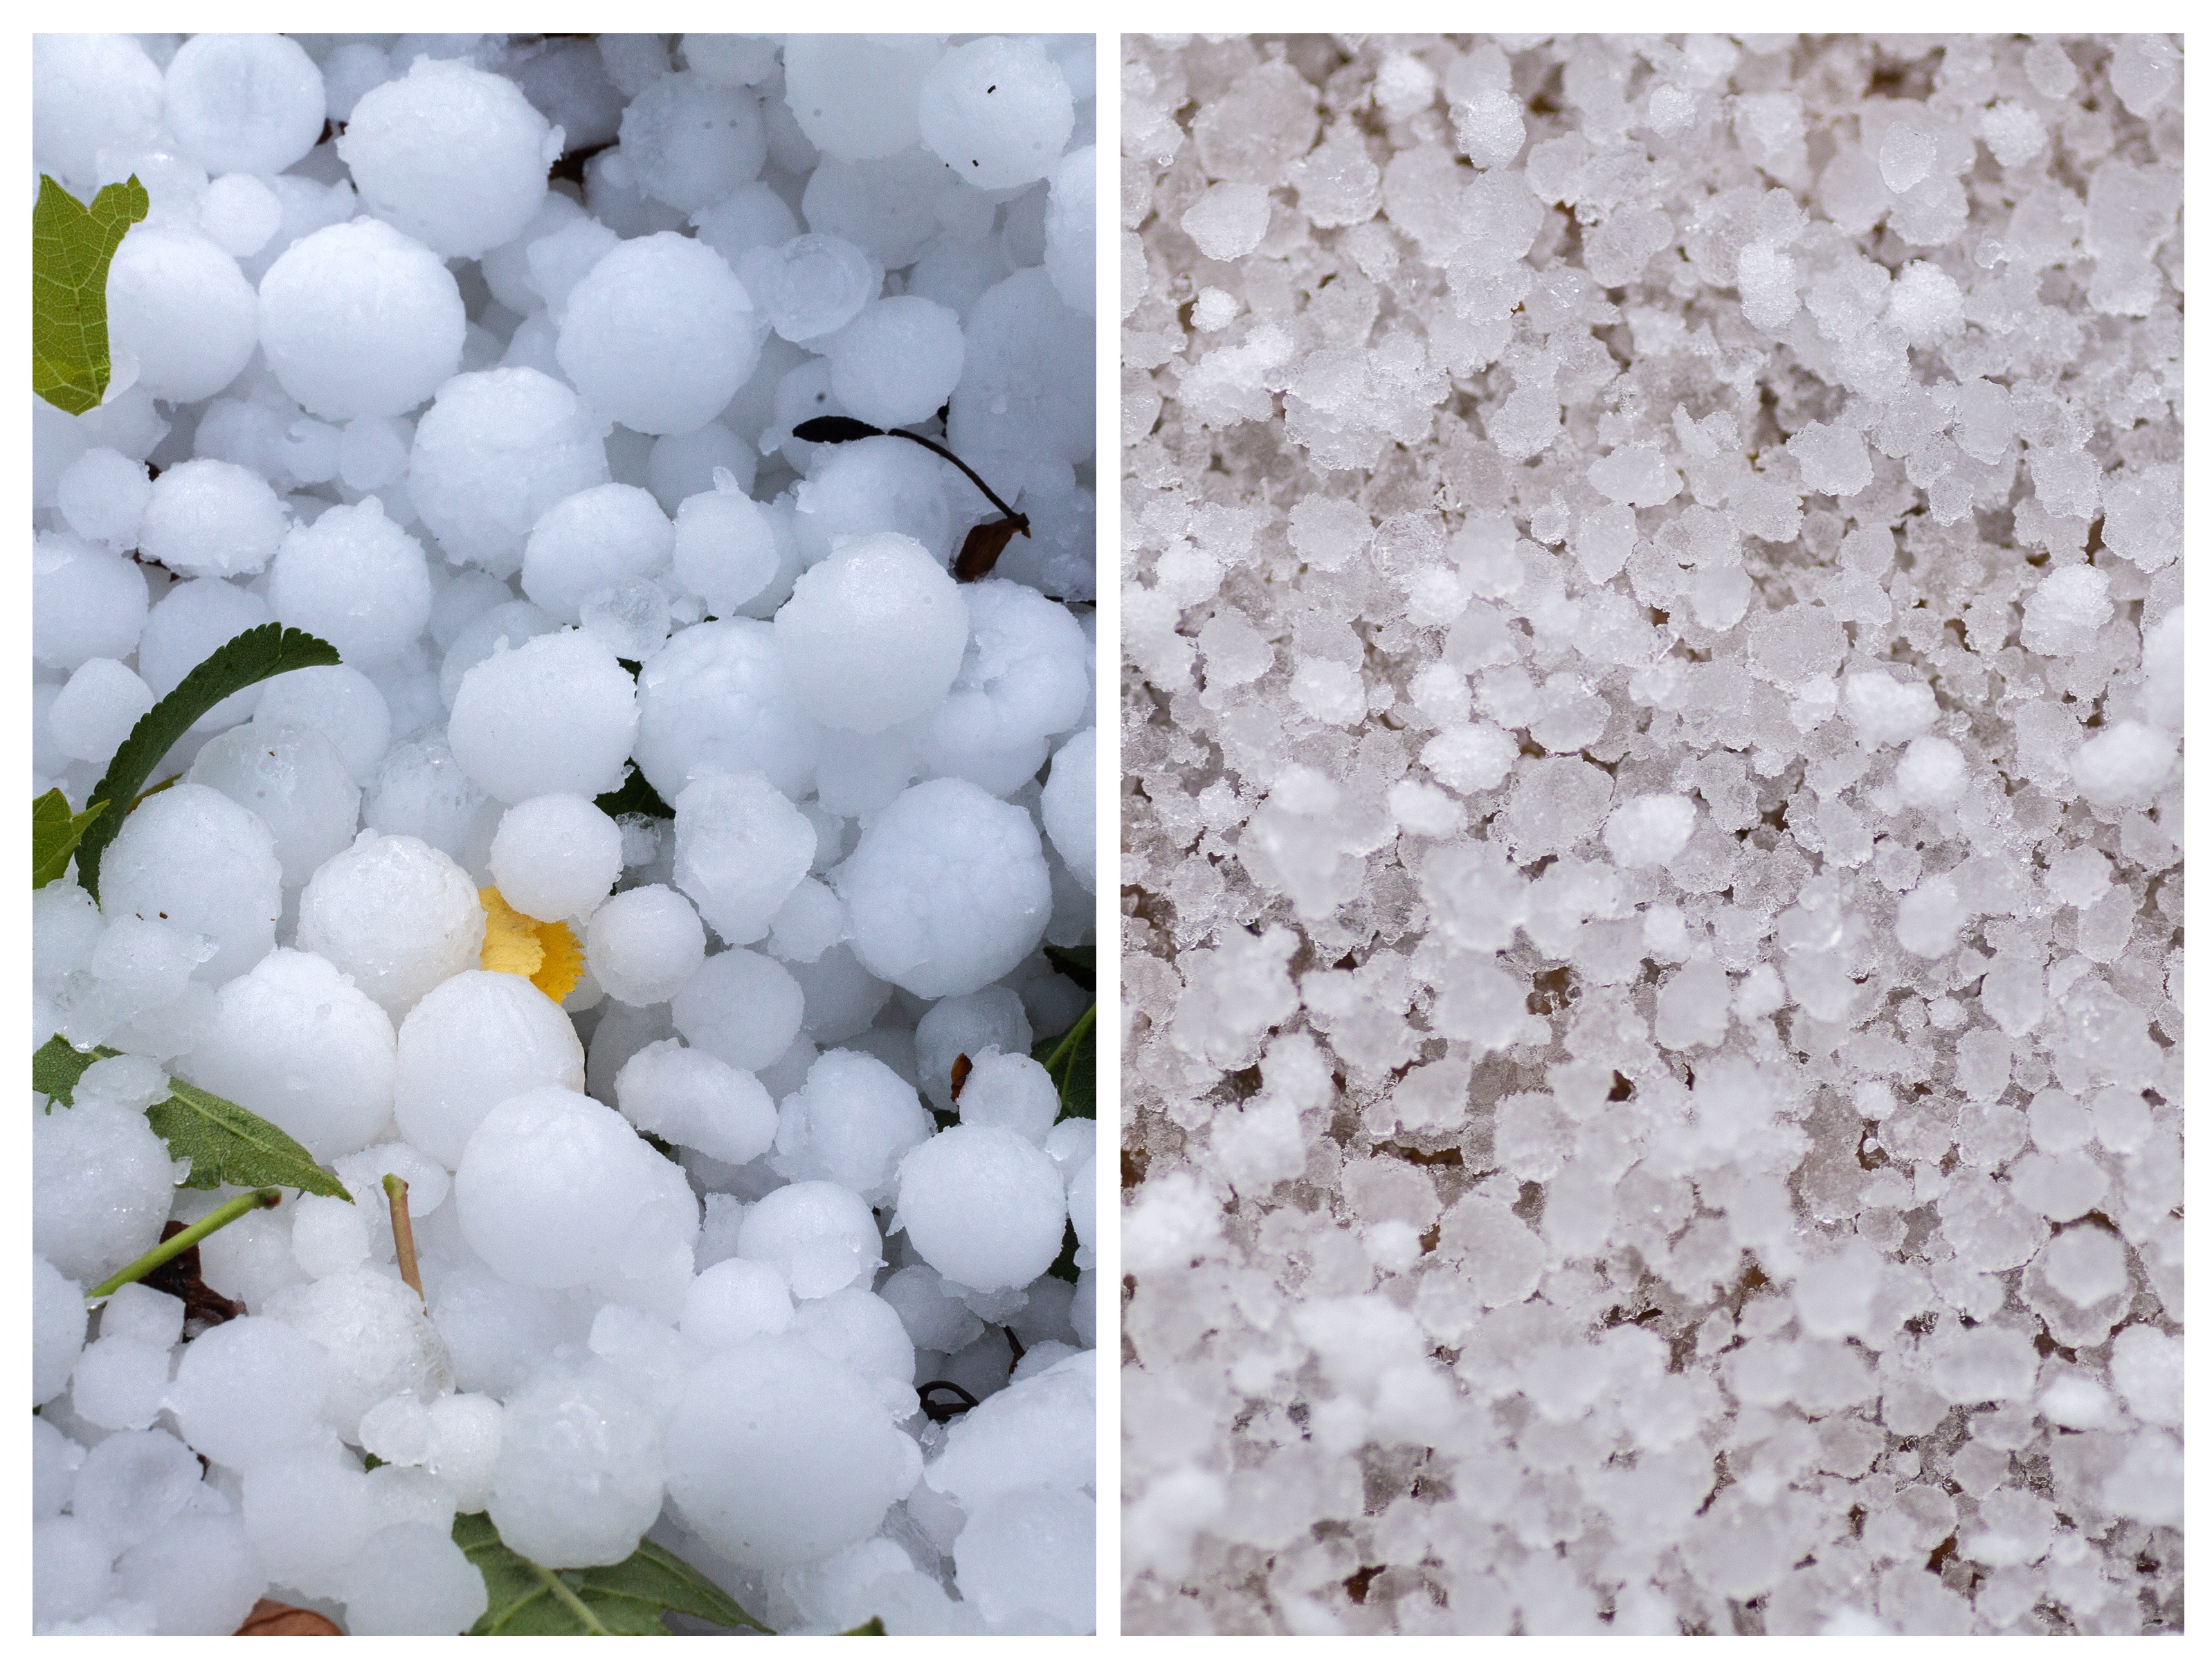 Hailstones and Graupel